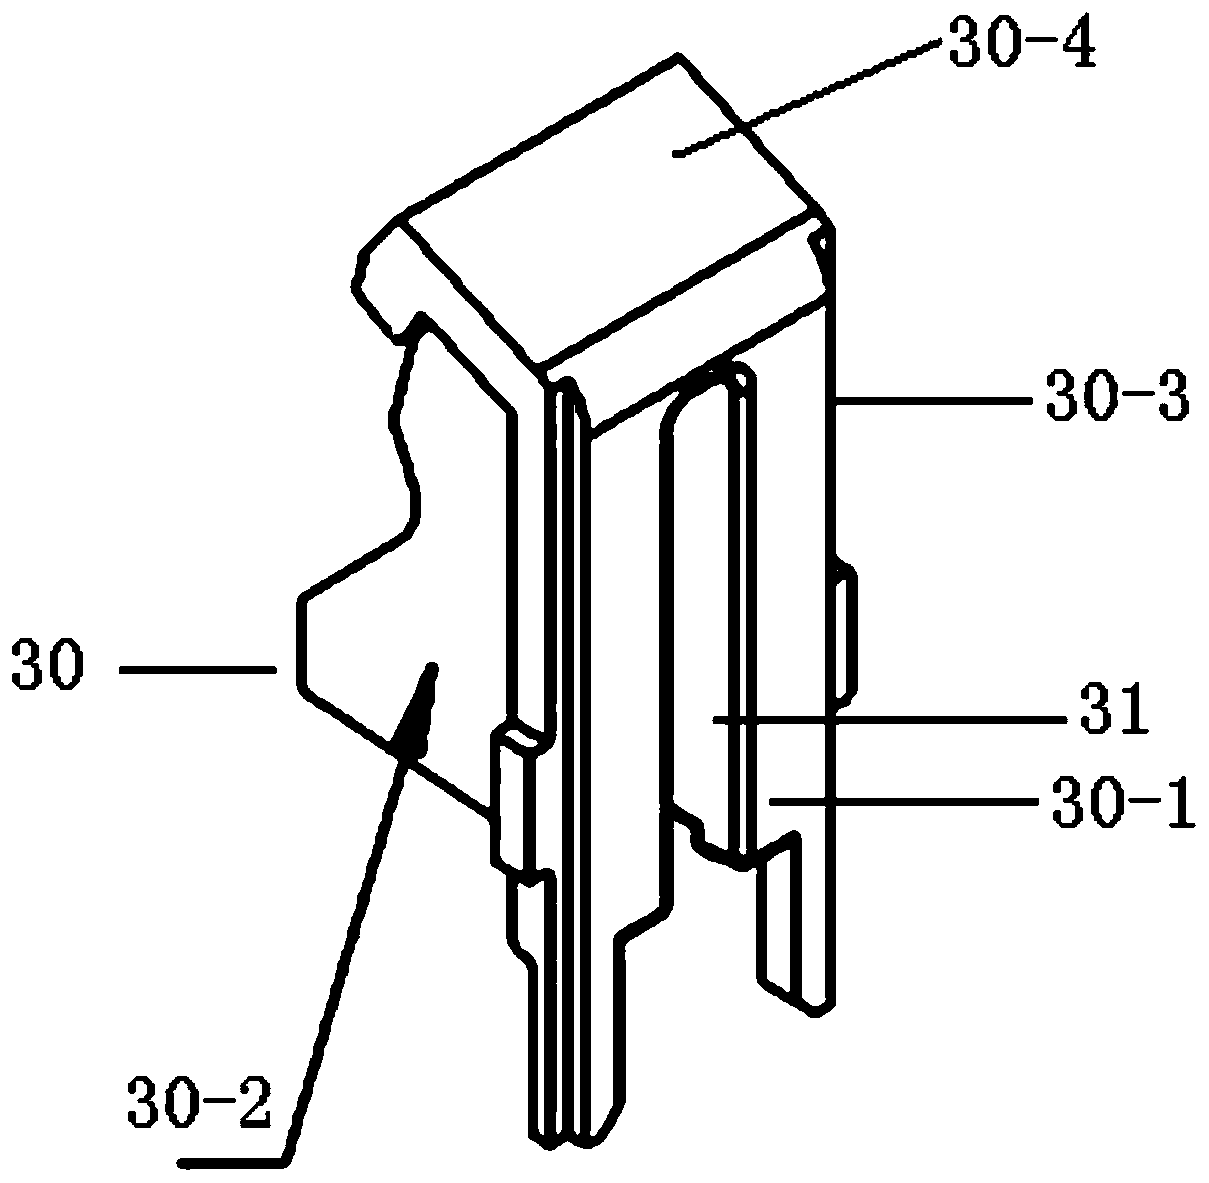 Arc extinguishing device with integral arc isolating cover, and arc extinguishing method